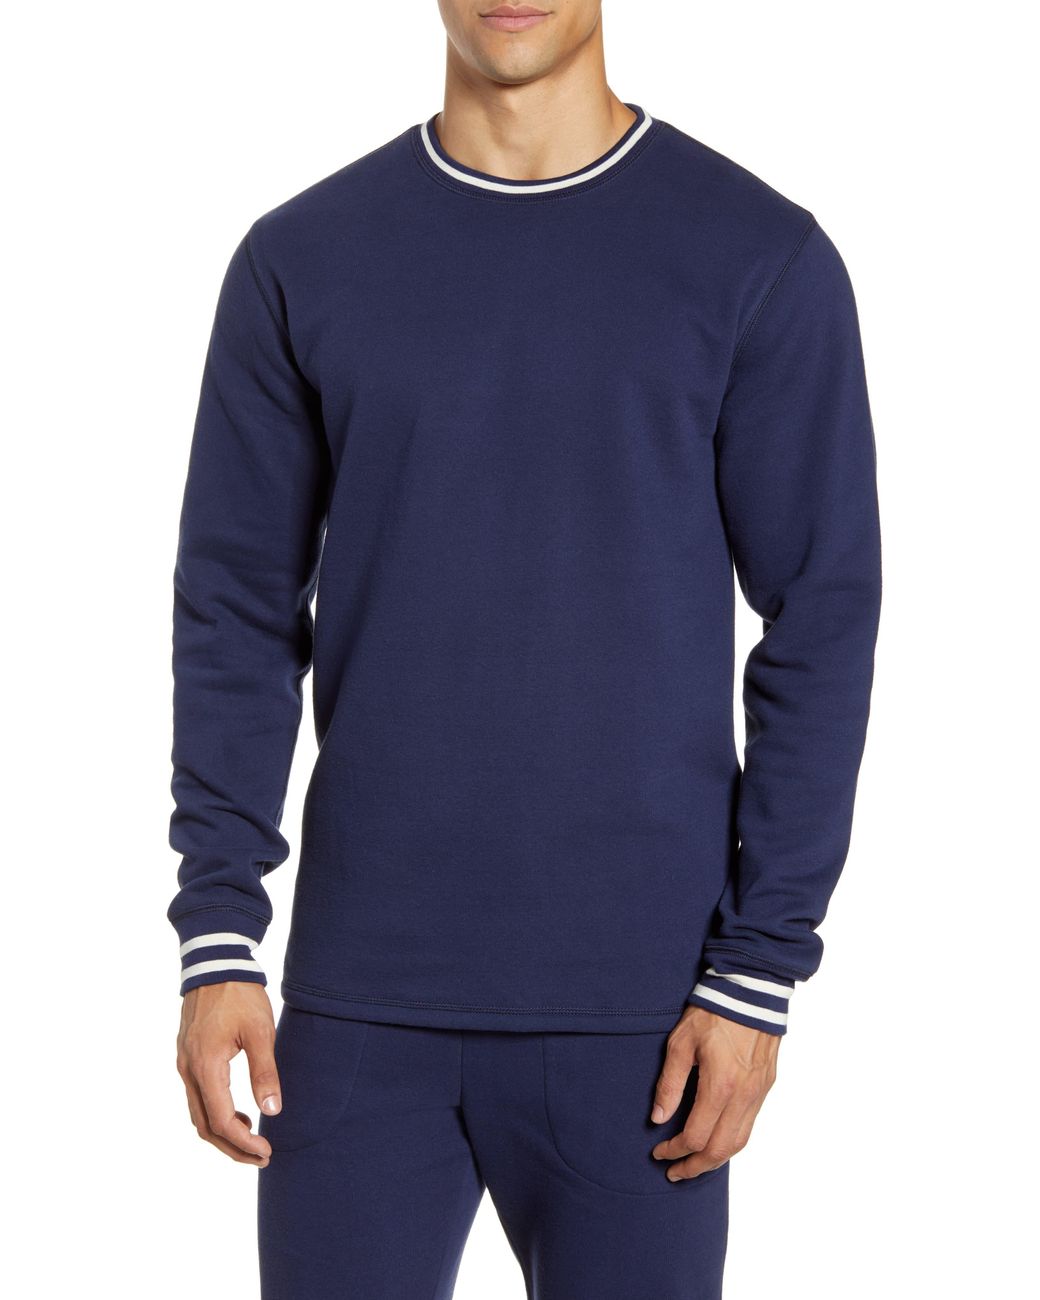 Polo Ralph Lauren Cotton Crewneck Sweatshirt in Blue for Men - Lyst